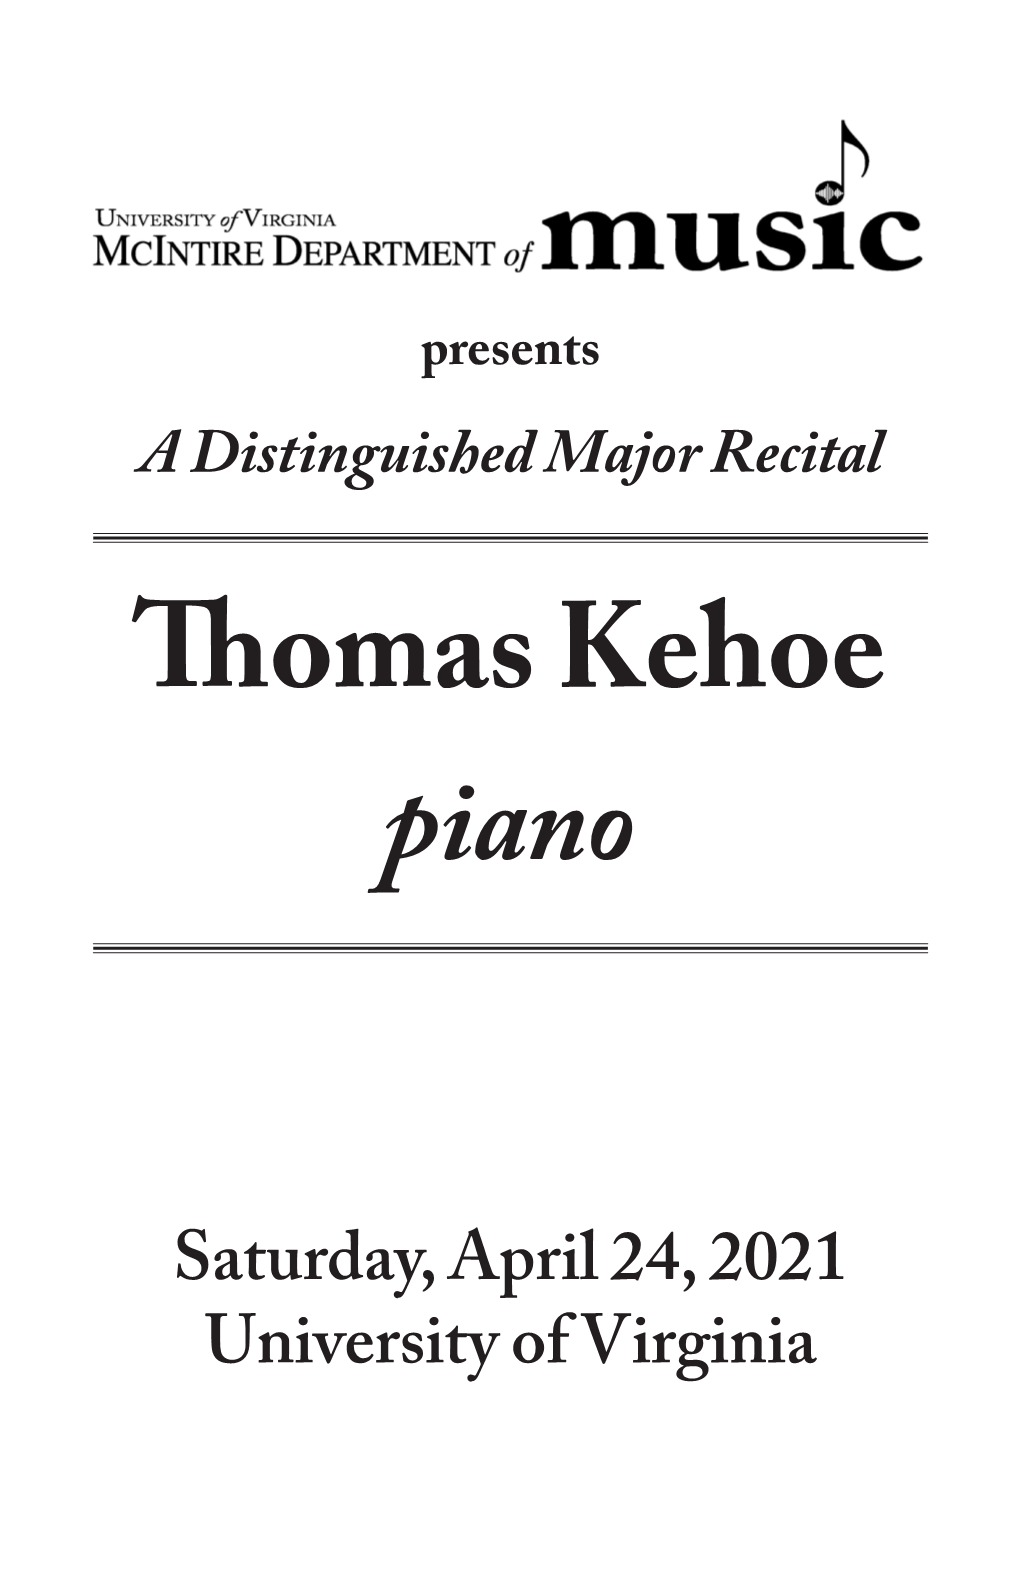 Thomas Kehoe Piano